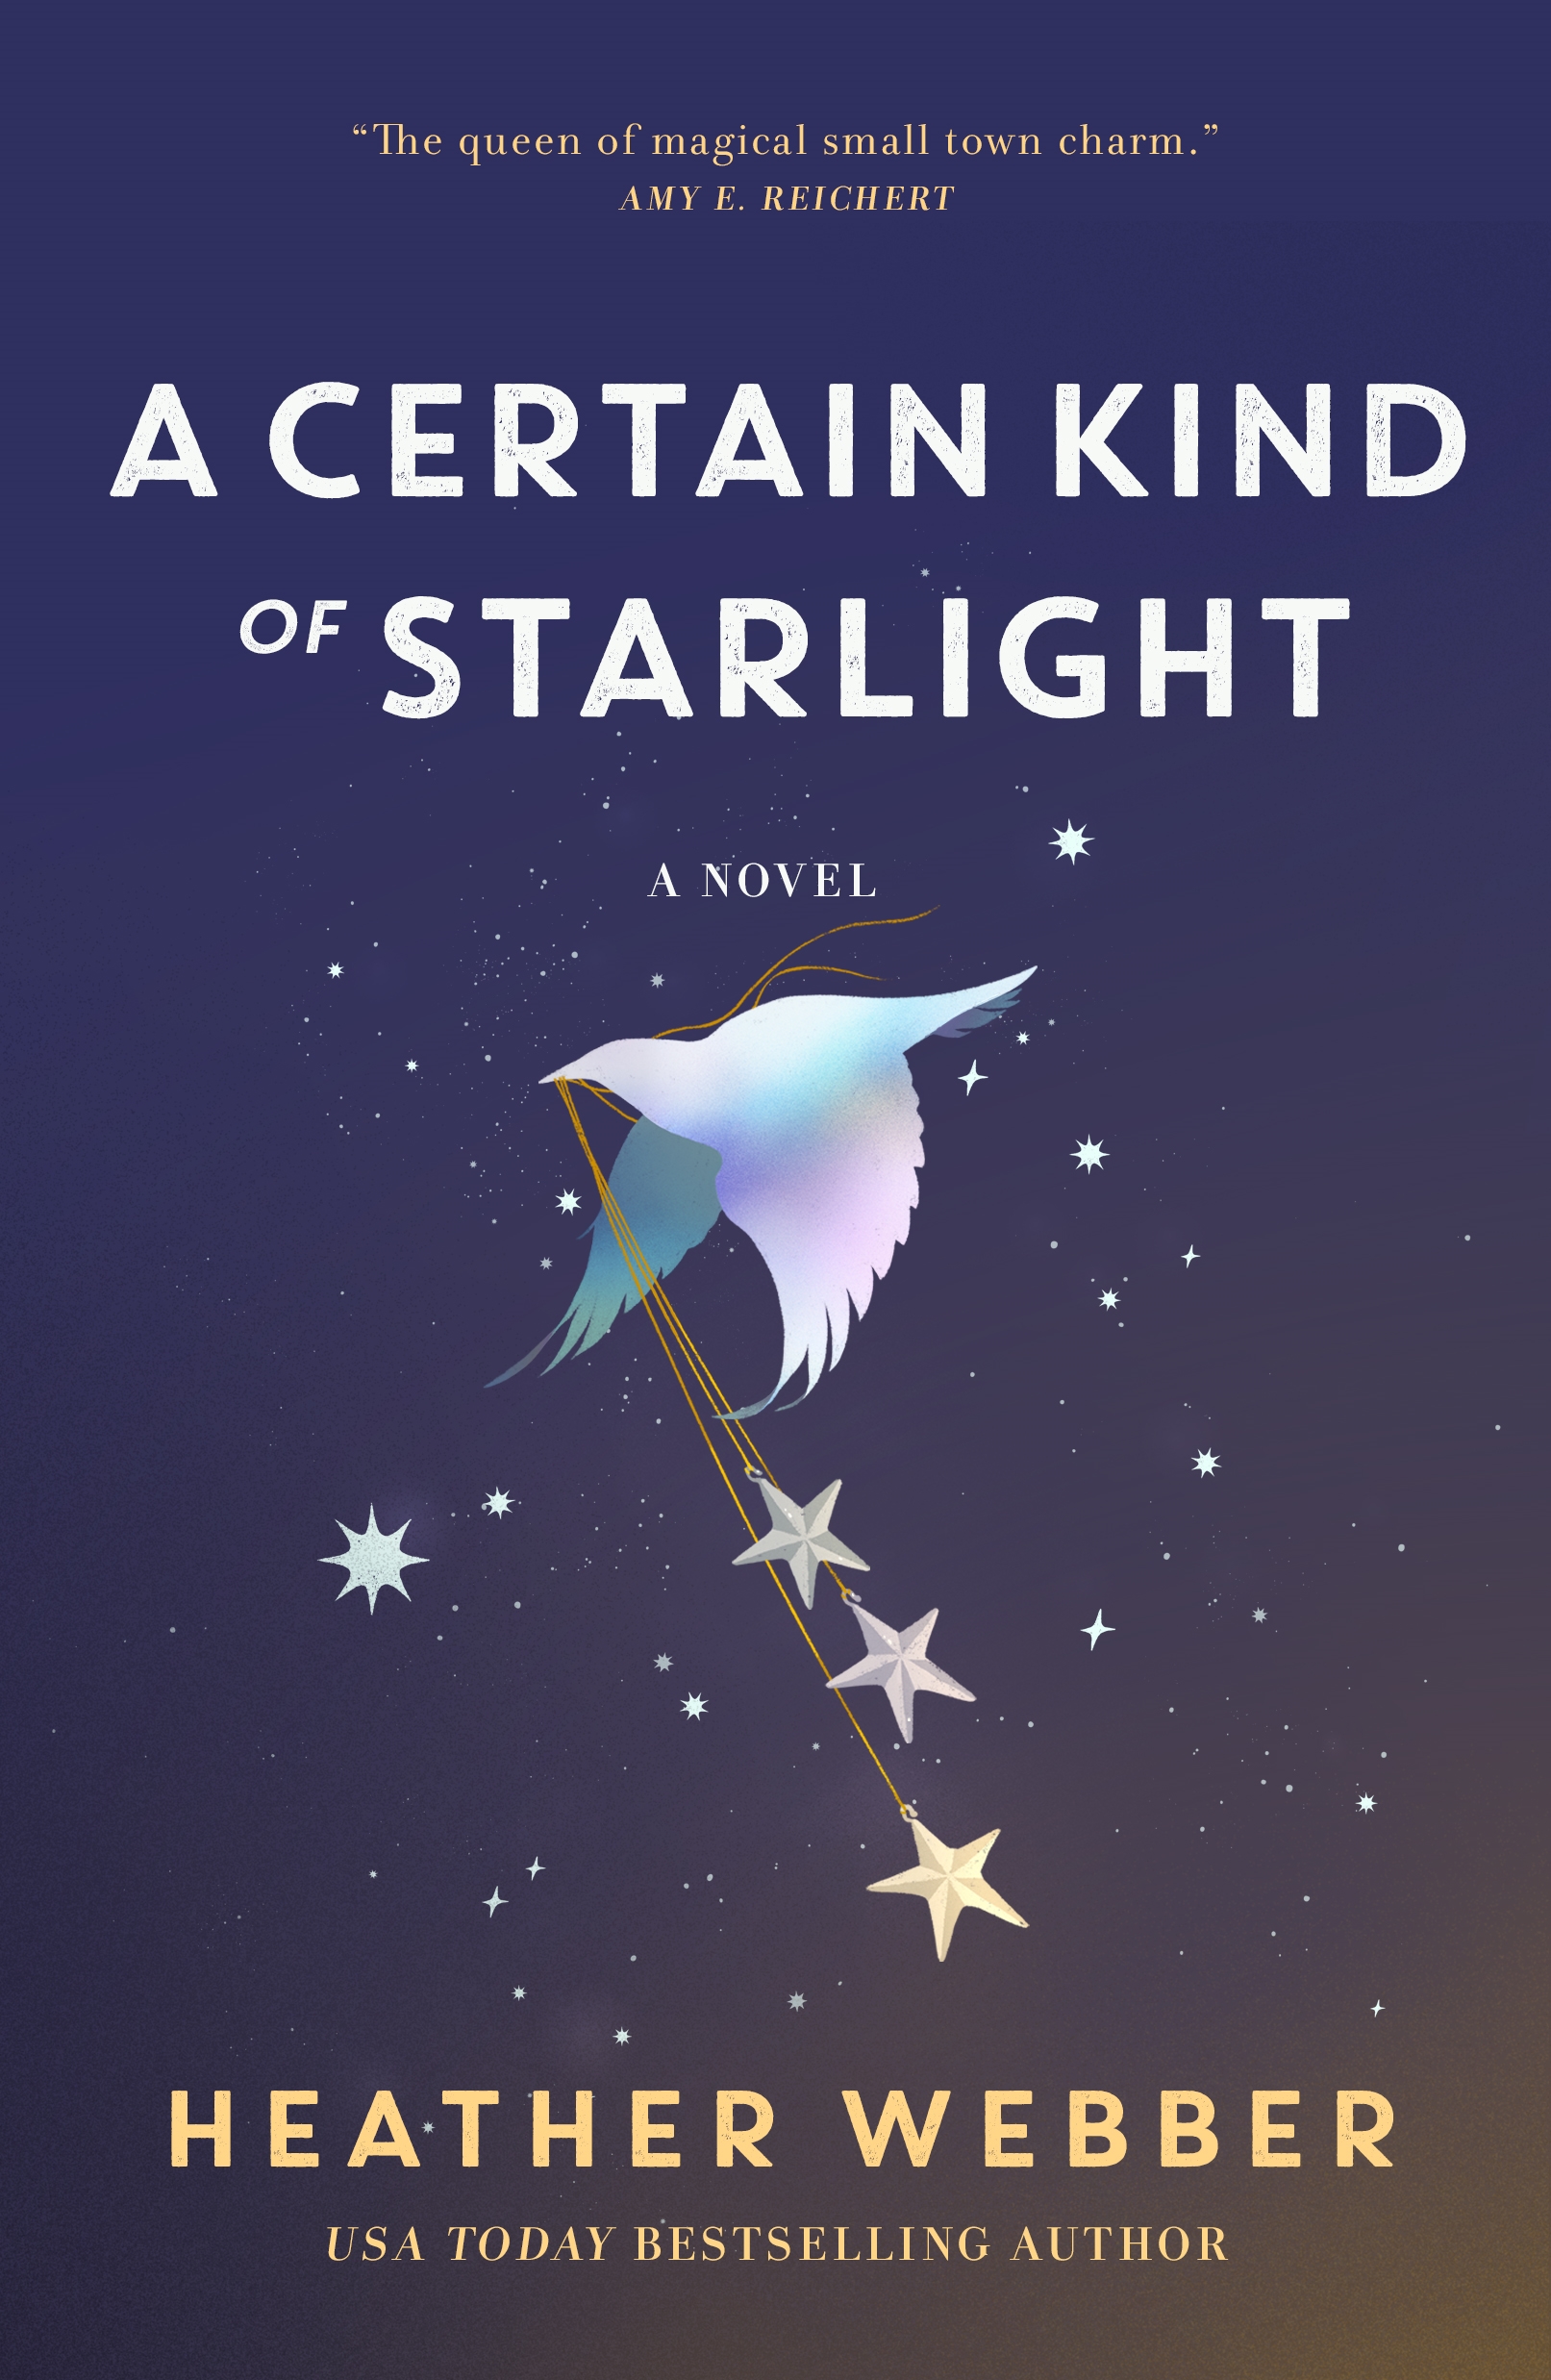 A Certain Kind of Starlight : A Novel by Heather Webber